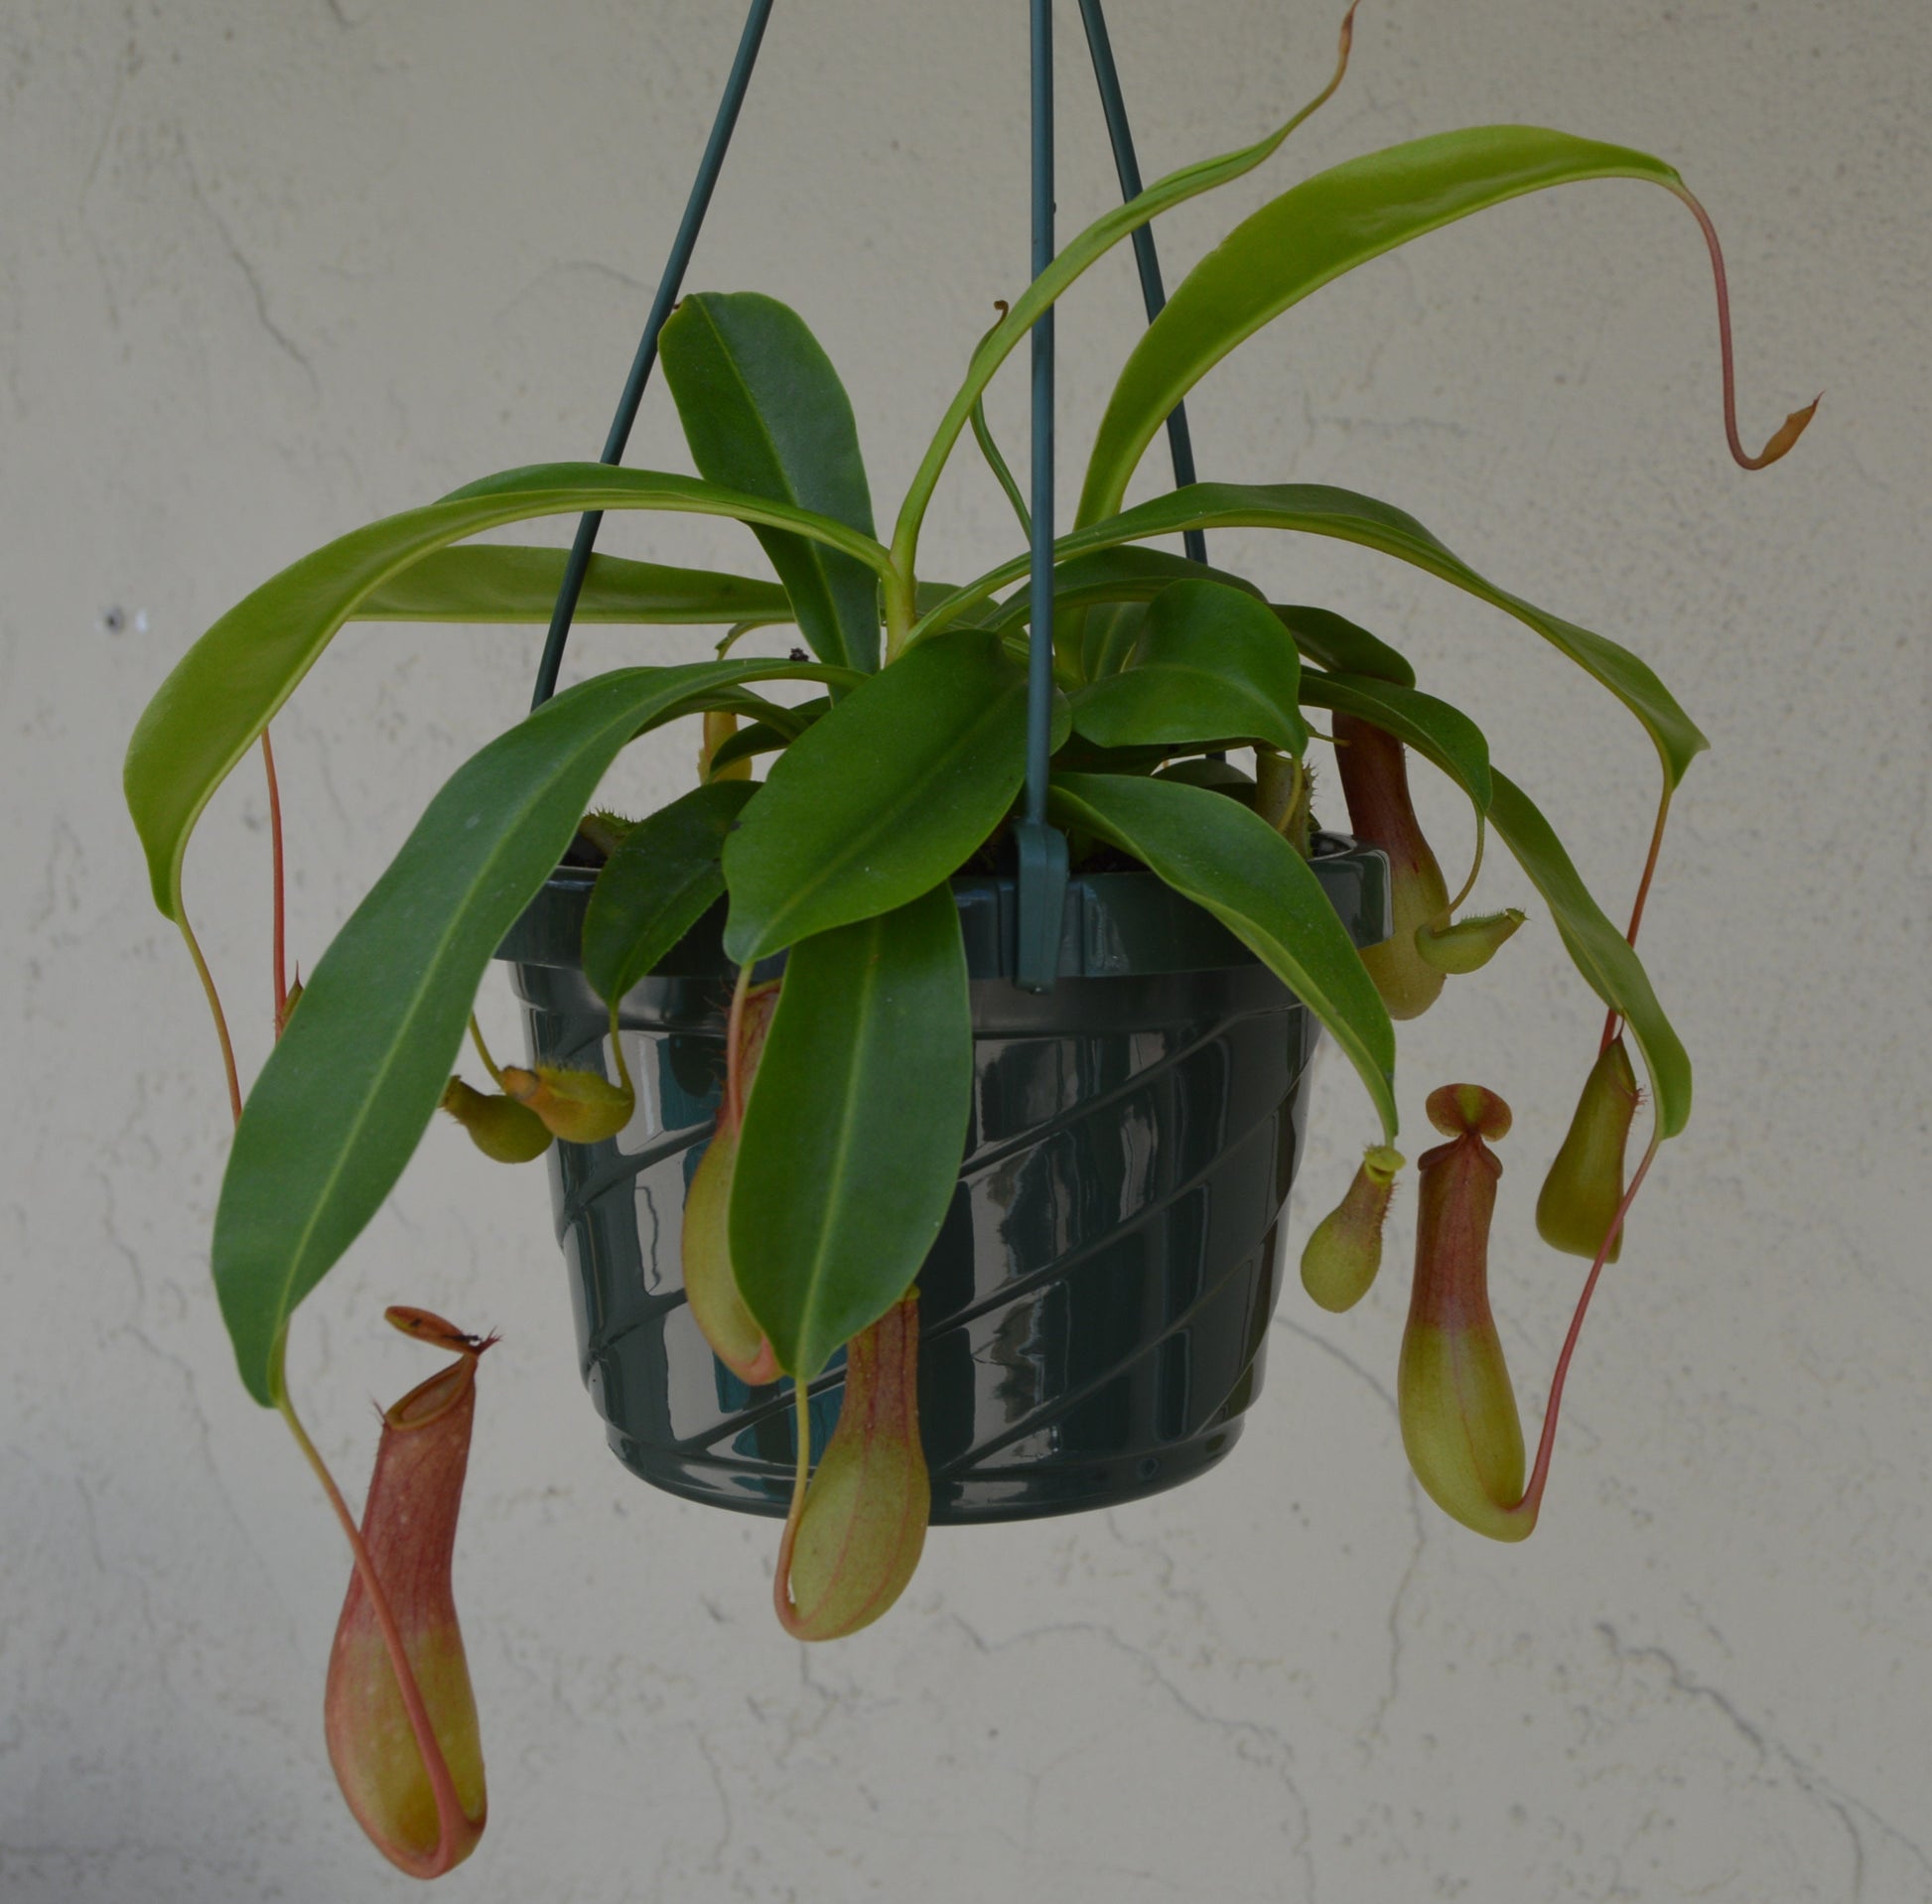 carnivorous pitcher plants